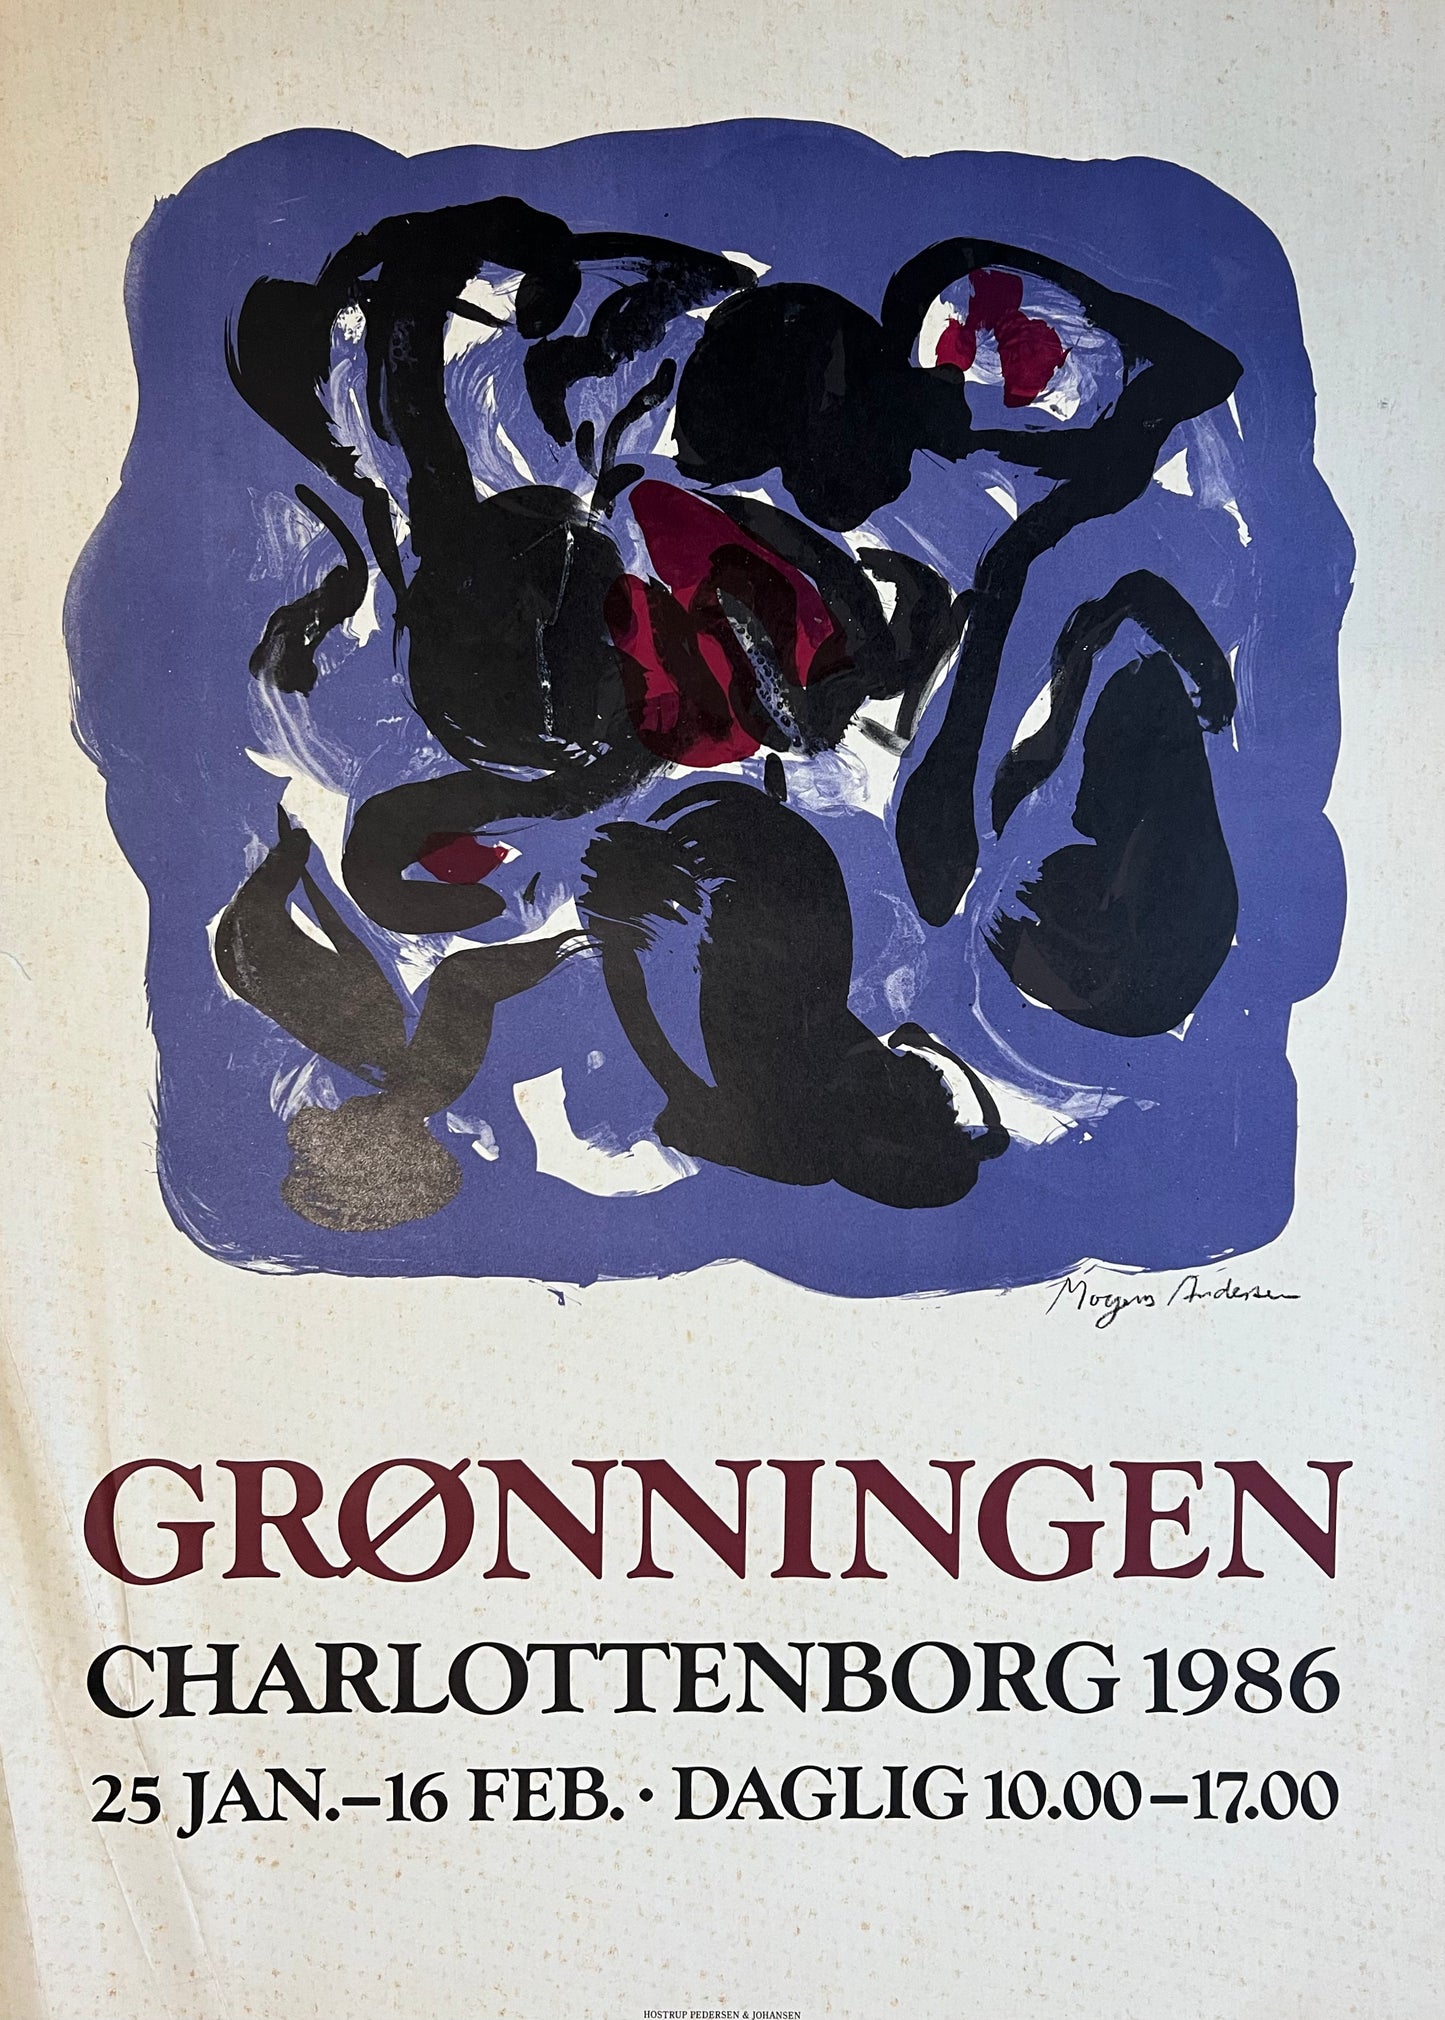 Mogens Andersen. "The Greening", 1986